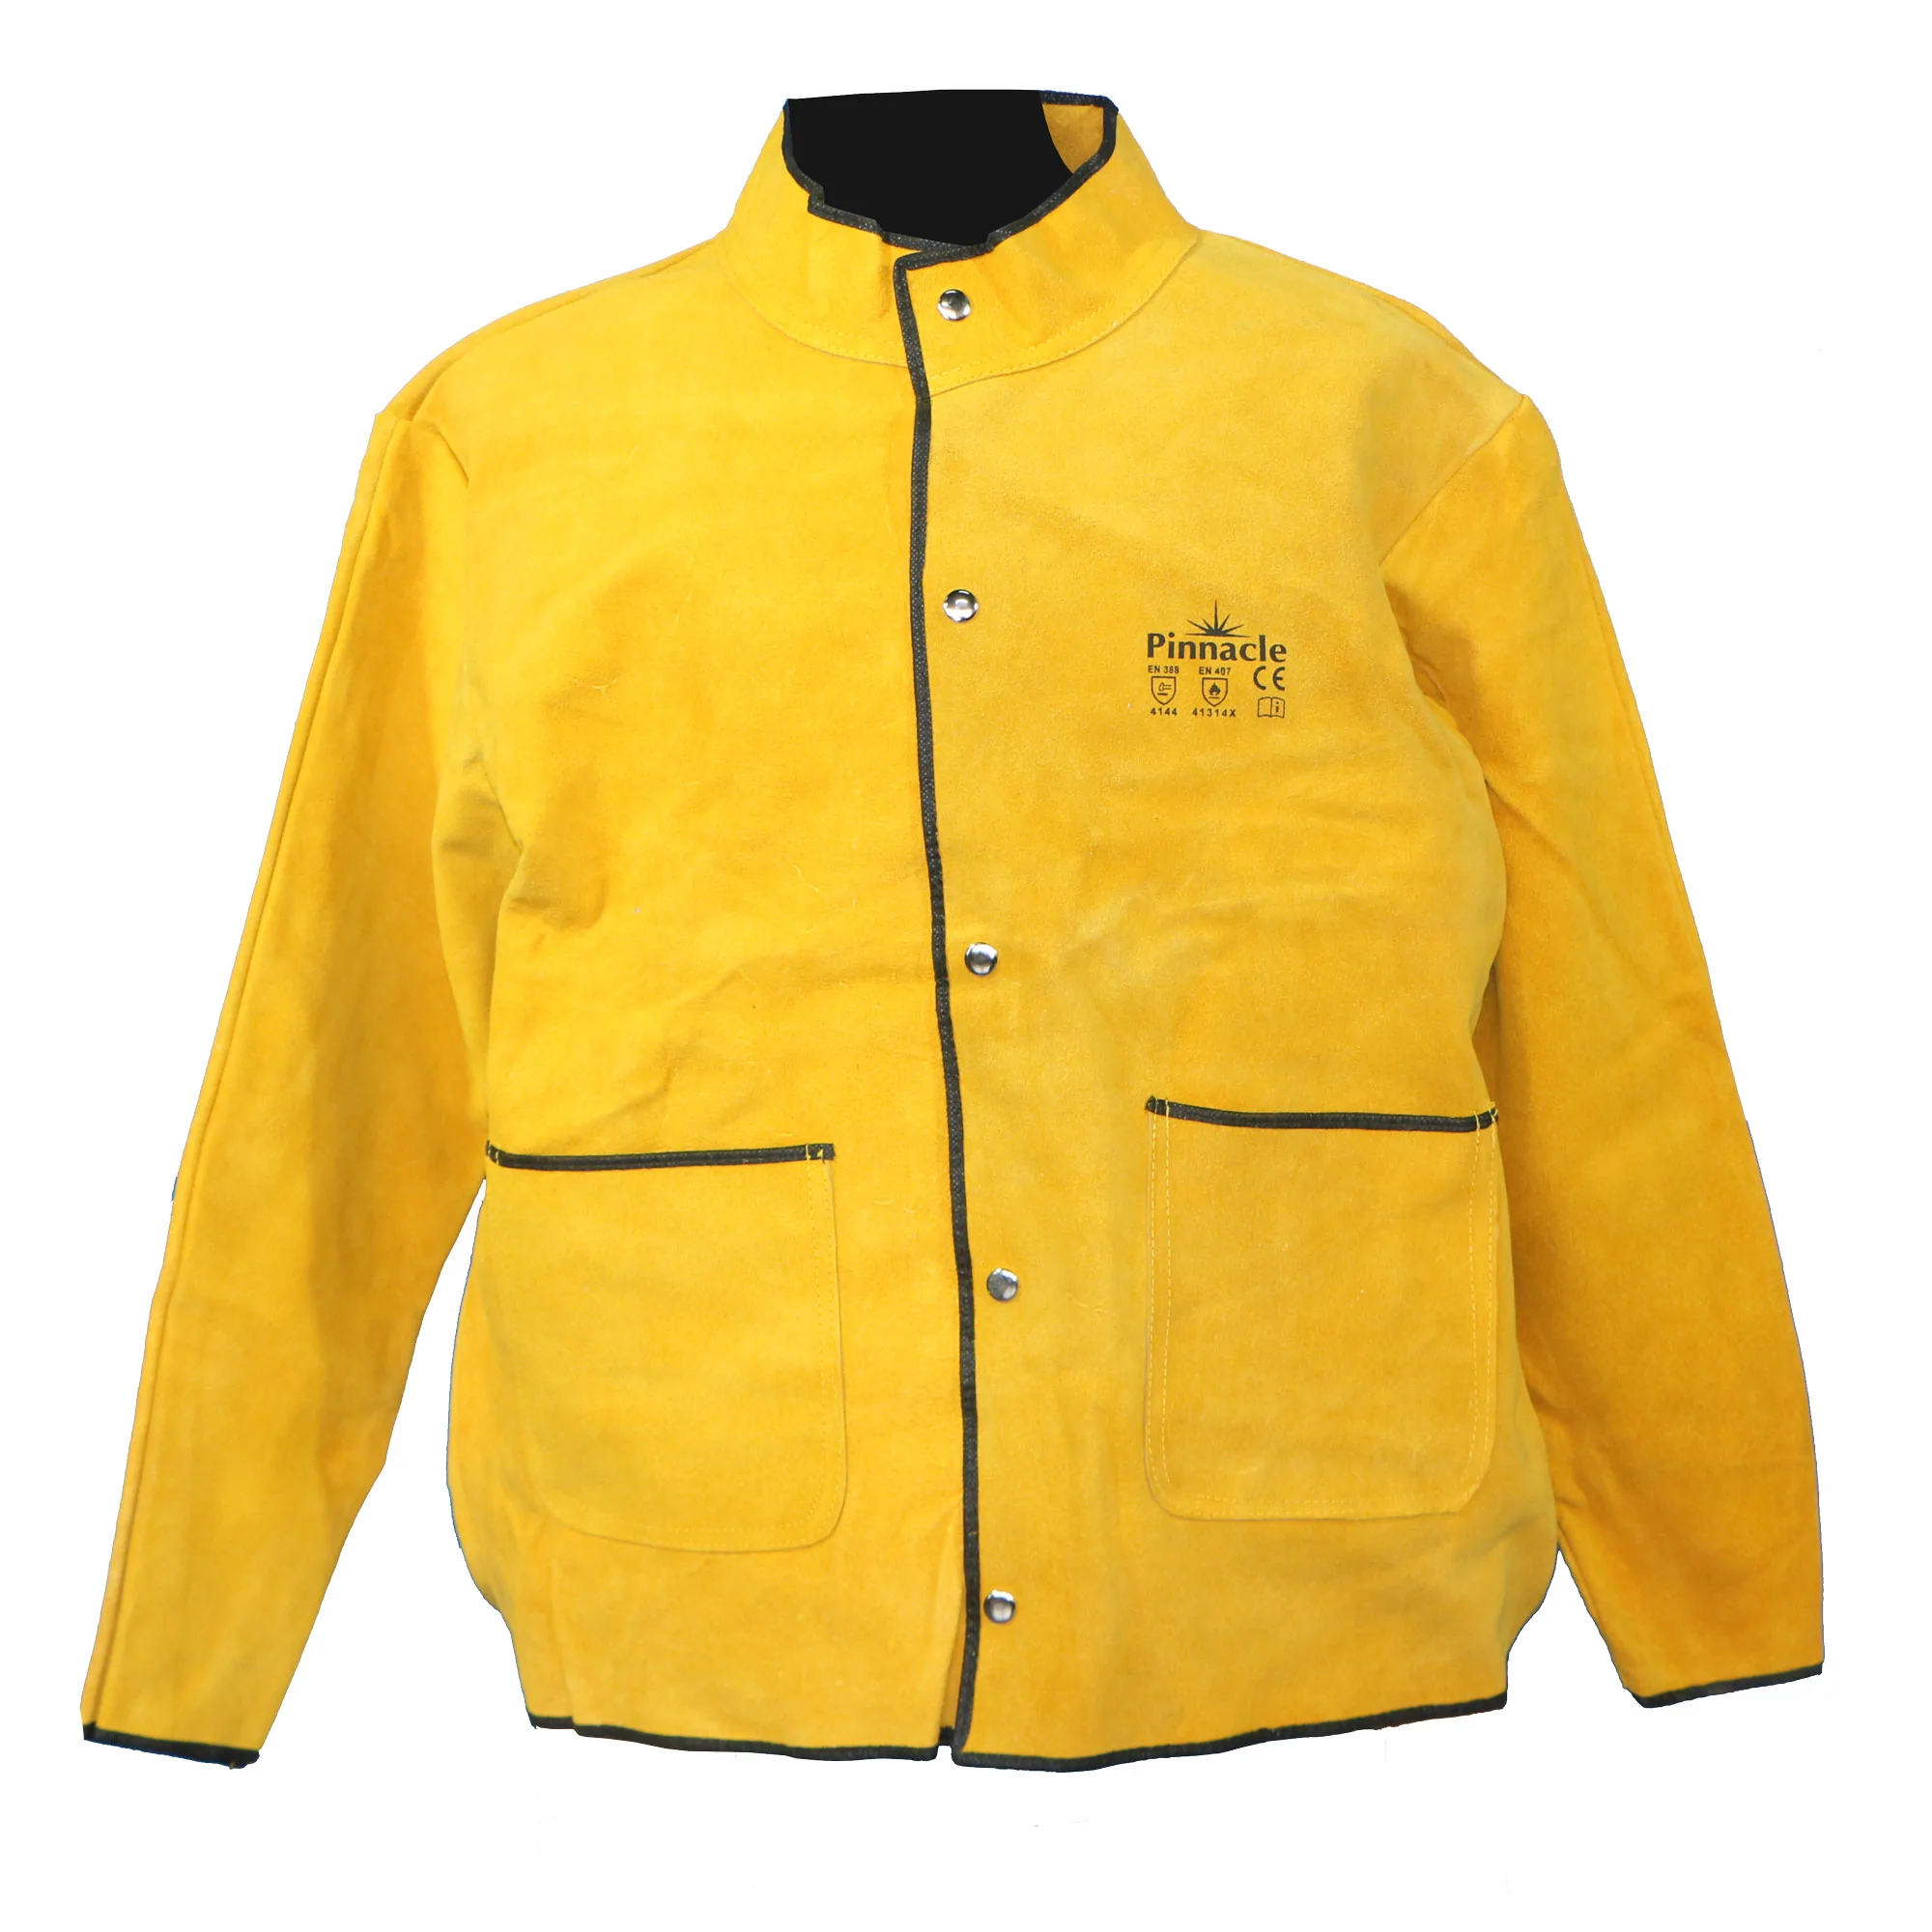 Yellow suede leather welding jacket